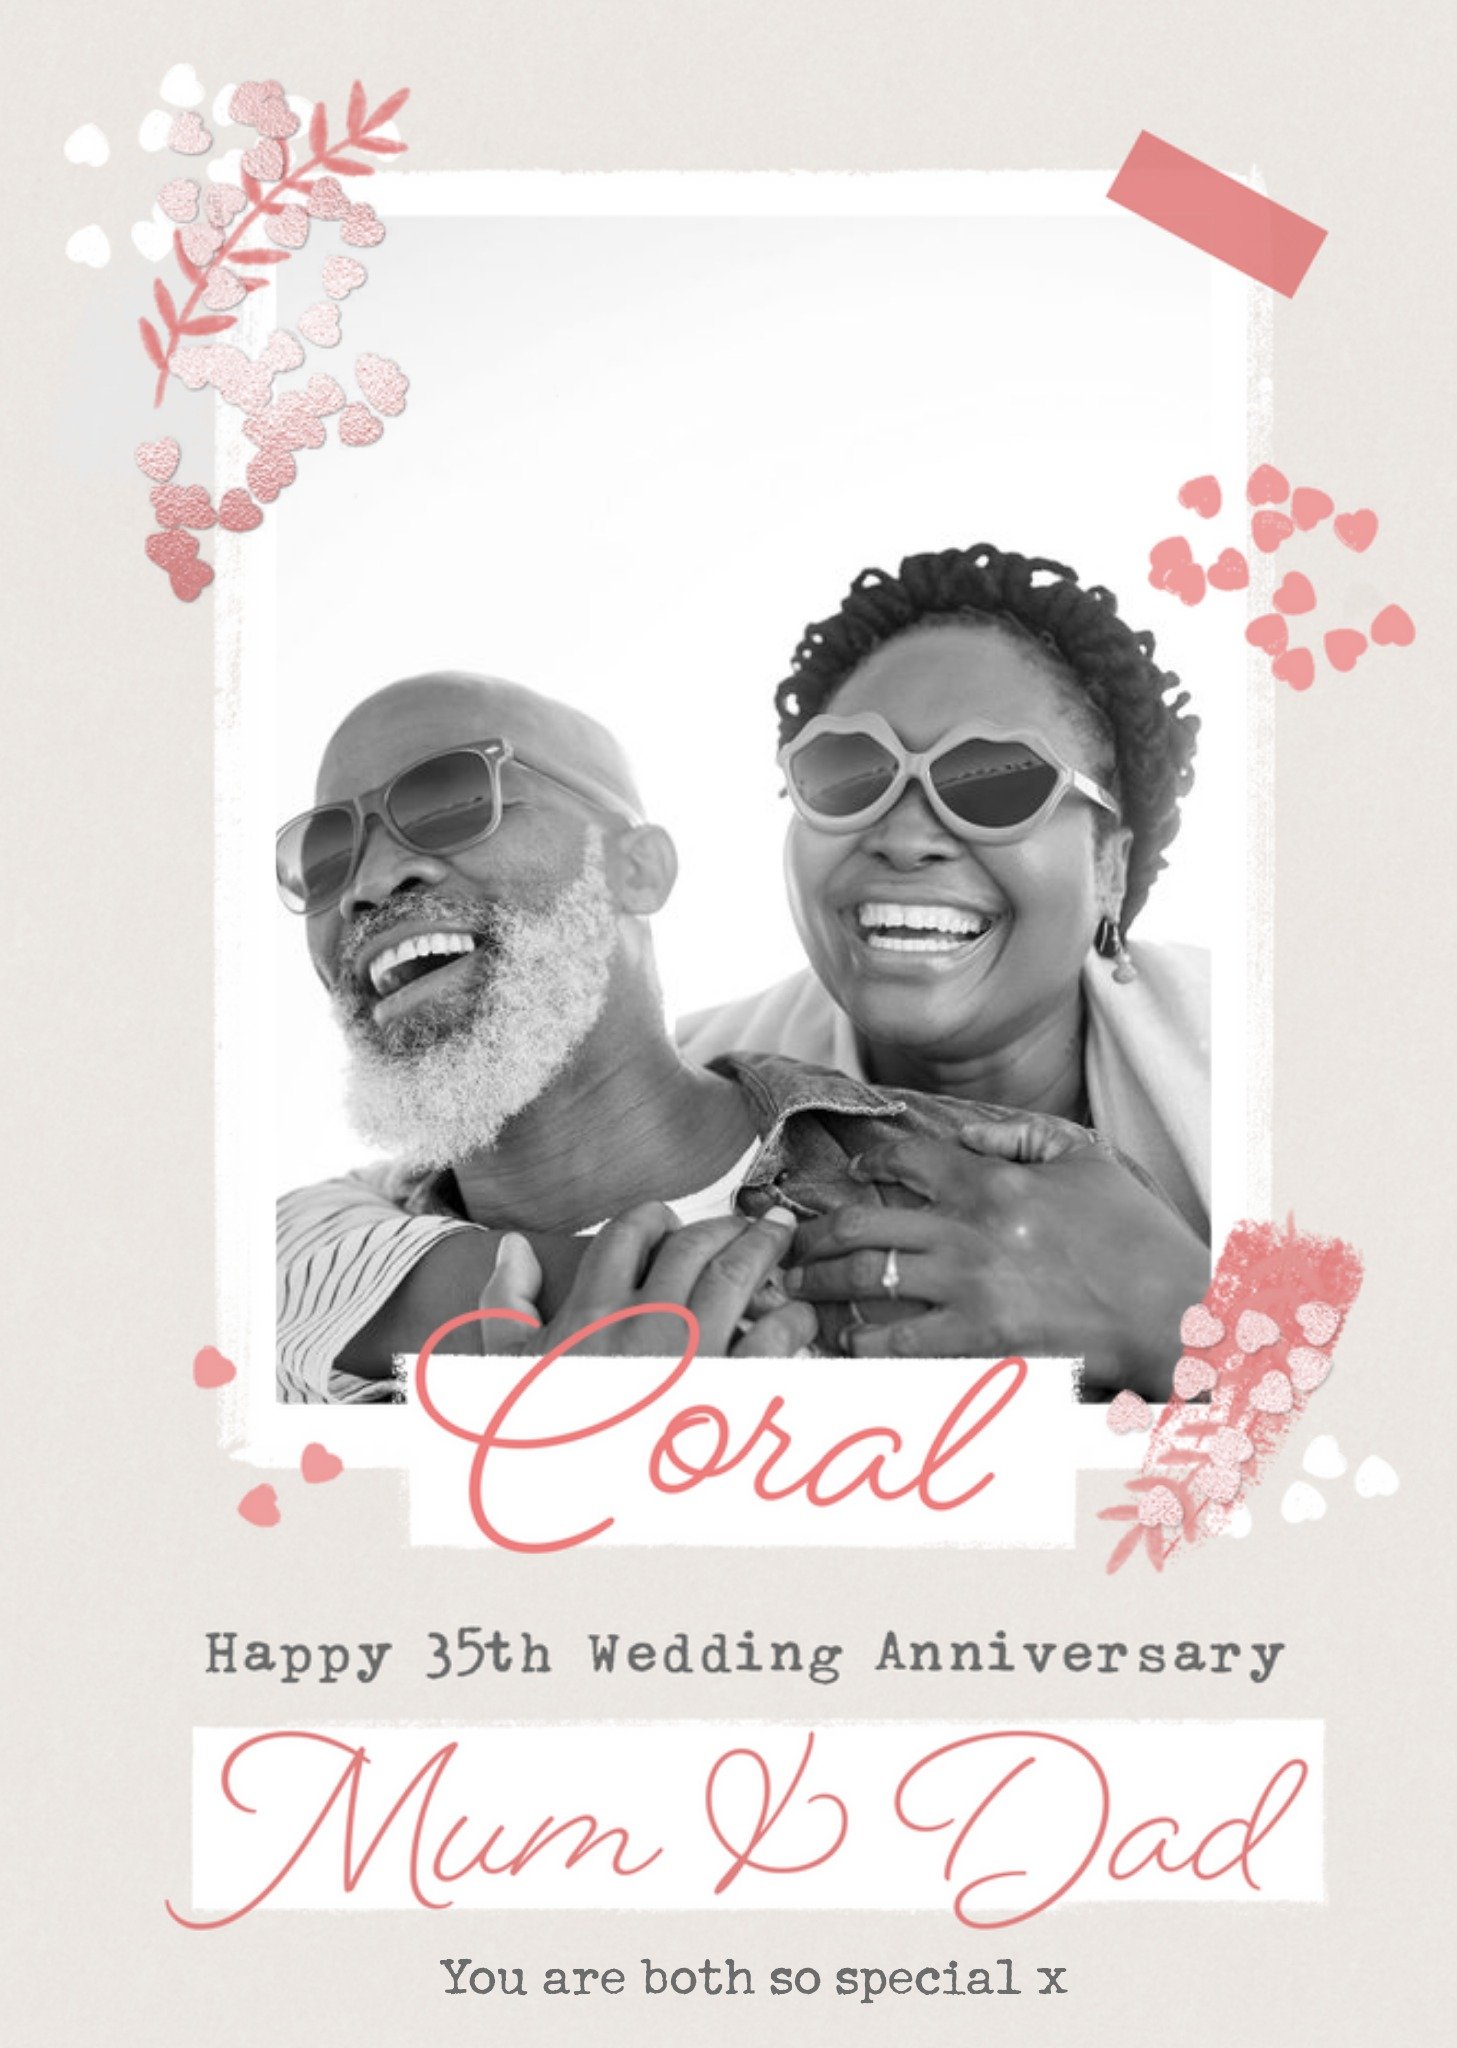 Moonpig Coral Happy 35th Wedding Anniversary Mum & Dad - Photo Upload Ecard